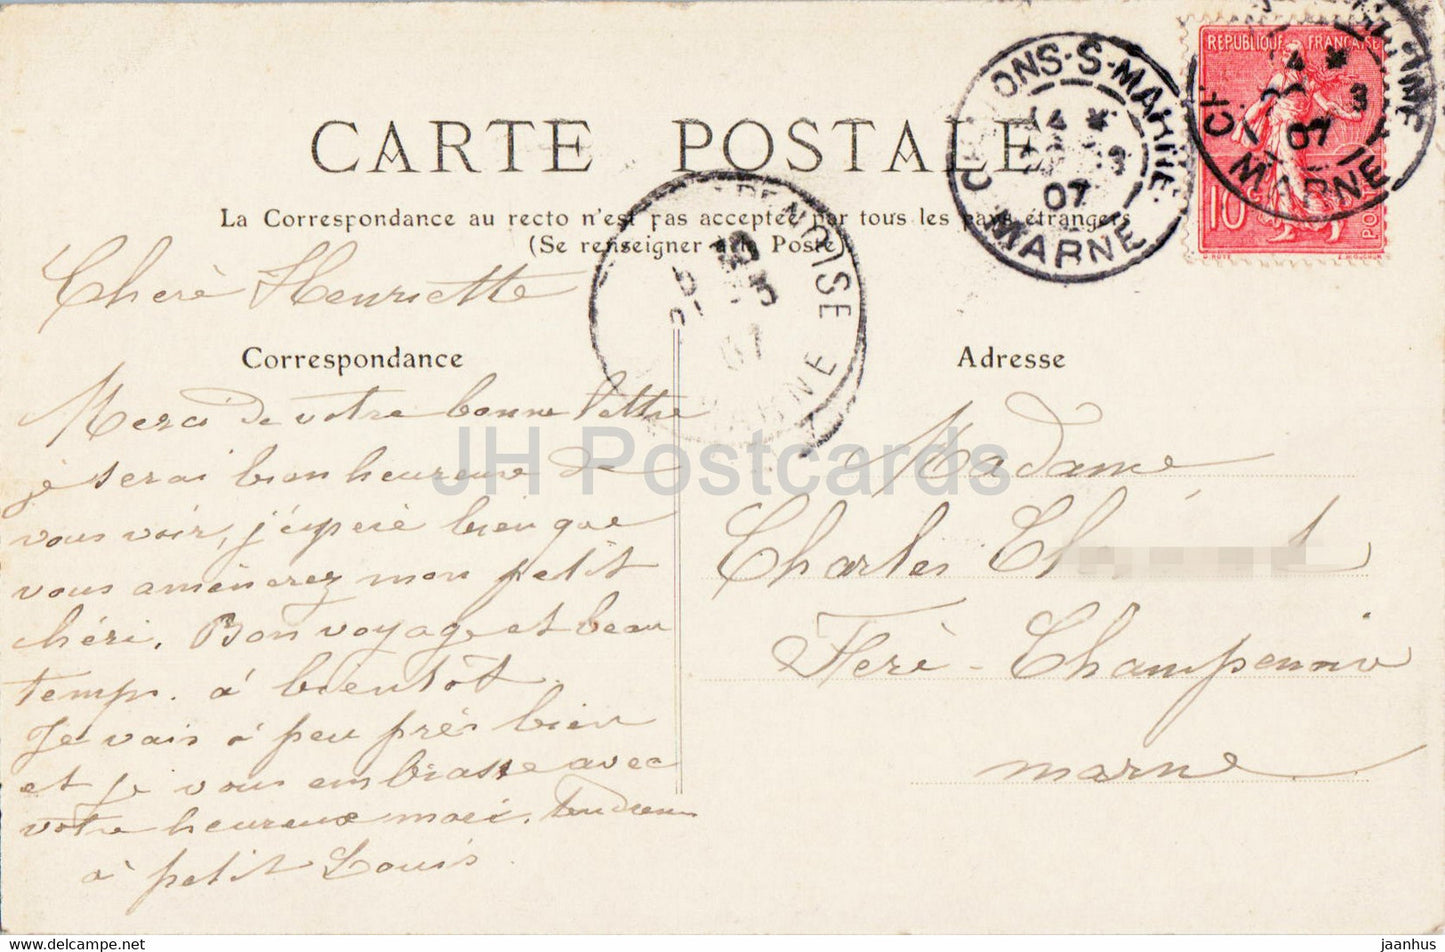 Chalons sur Marne - Monument Gloria Victis - De Mercee - devant la Cathedrale - 81 - old postcard - 1907 - France - used